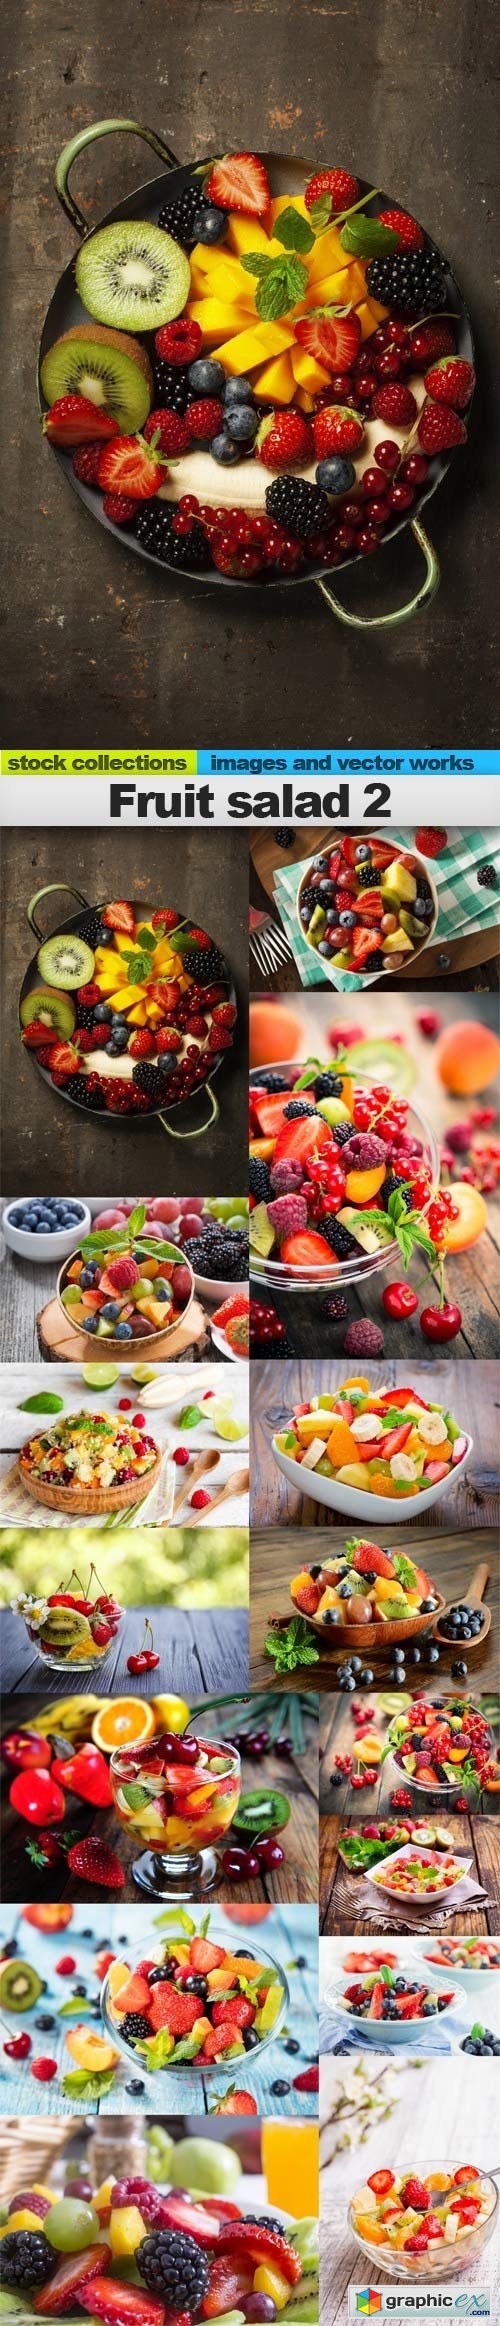 Fruit salad 2, 15 x UHQ JPEG